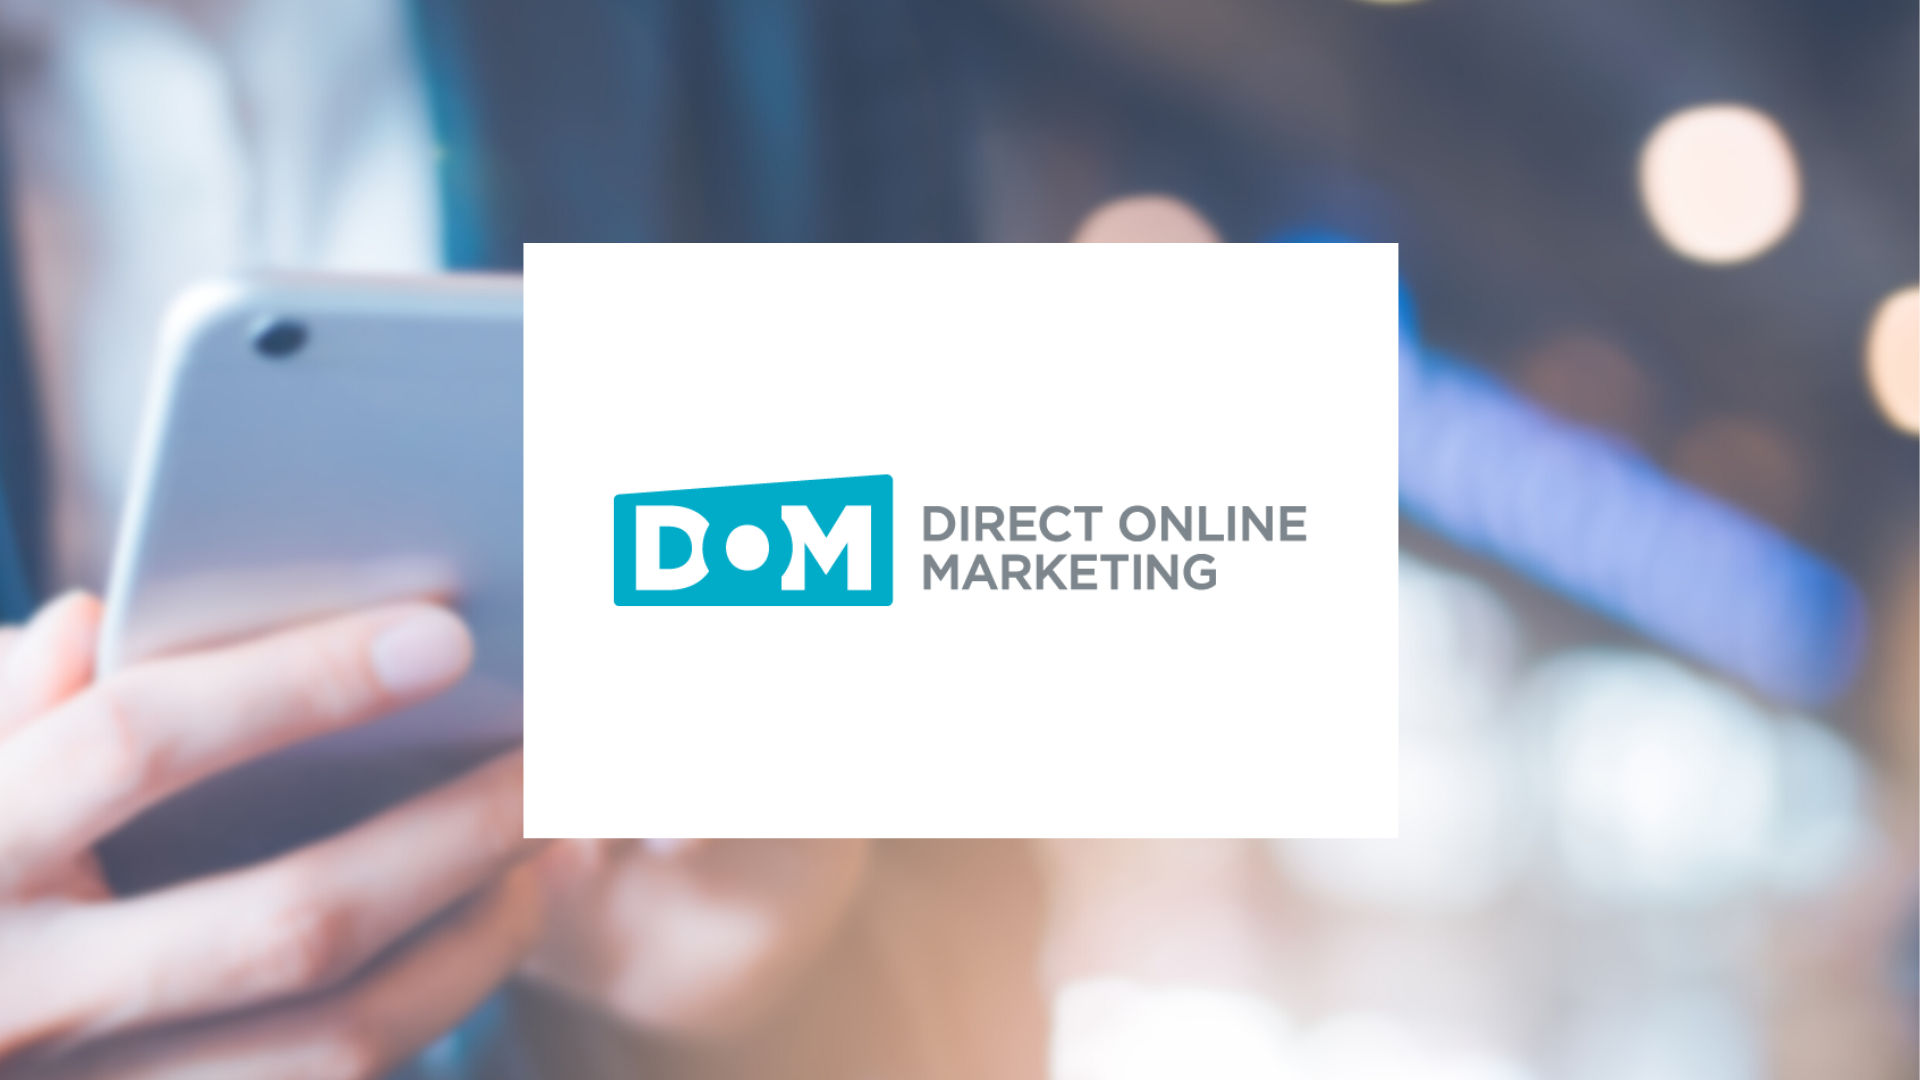 Direct Online Marketing